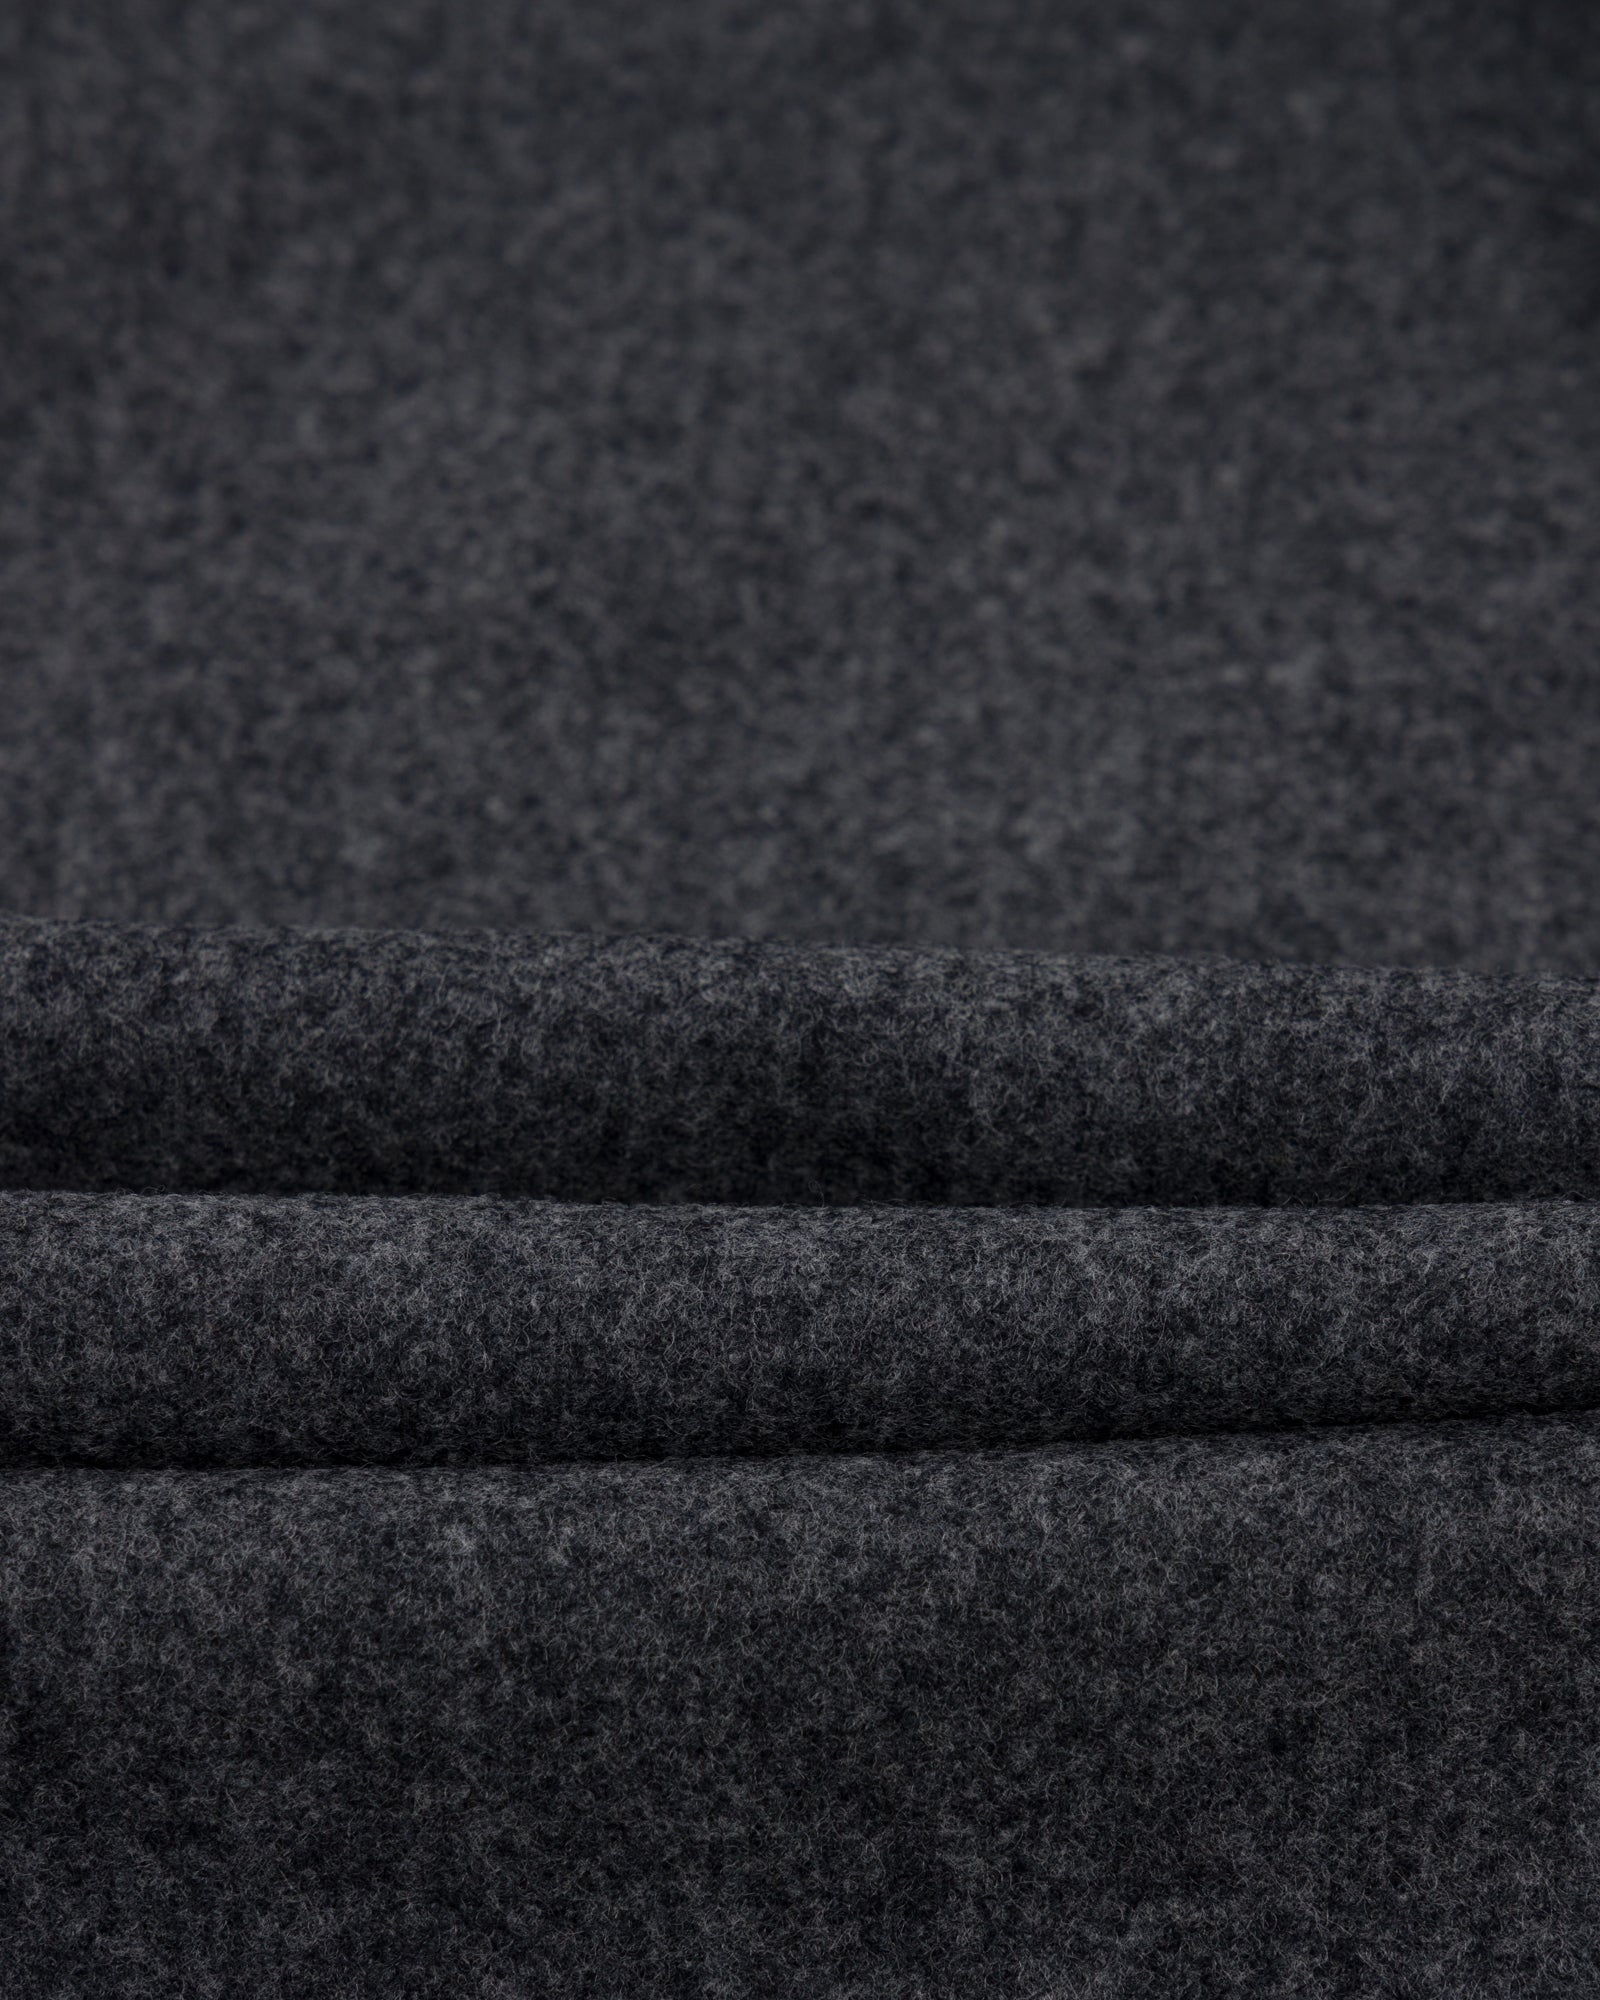 Sport Jacket - Mid Grey Woollen Flannel